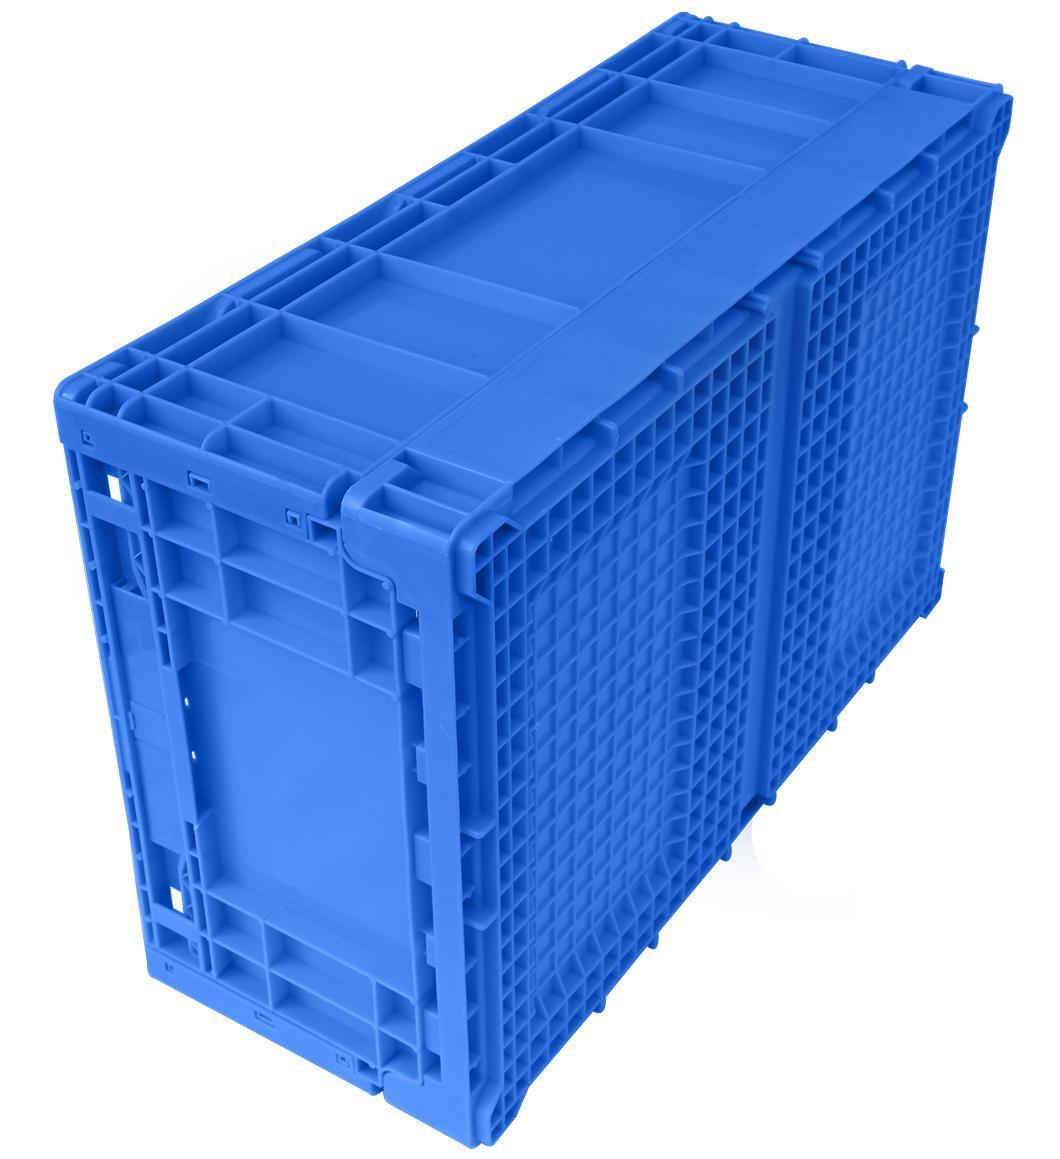 S806b S Folding Containers Adjustable Plastic Storage Box, Foldable Storage Box, Hard Plastic Collapsible Storage Box